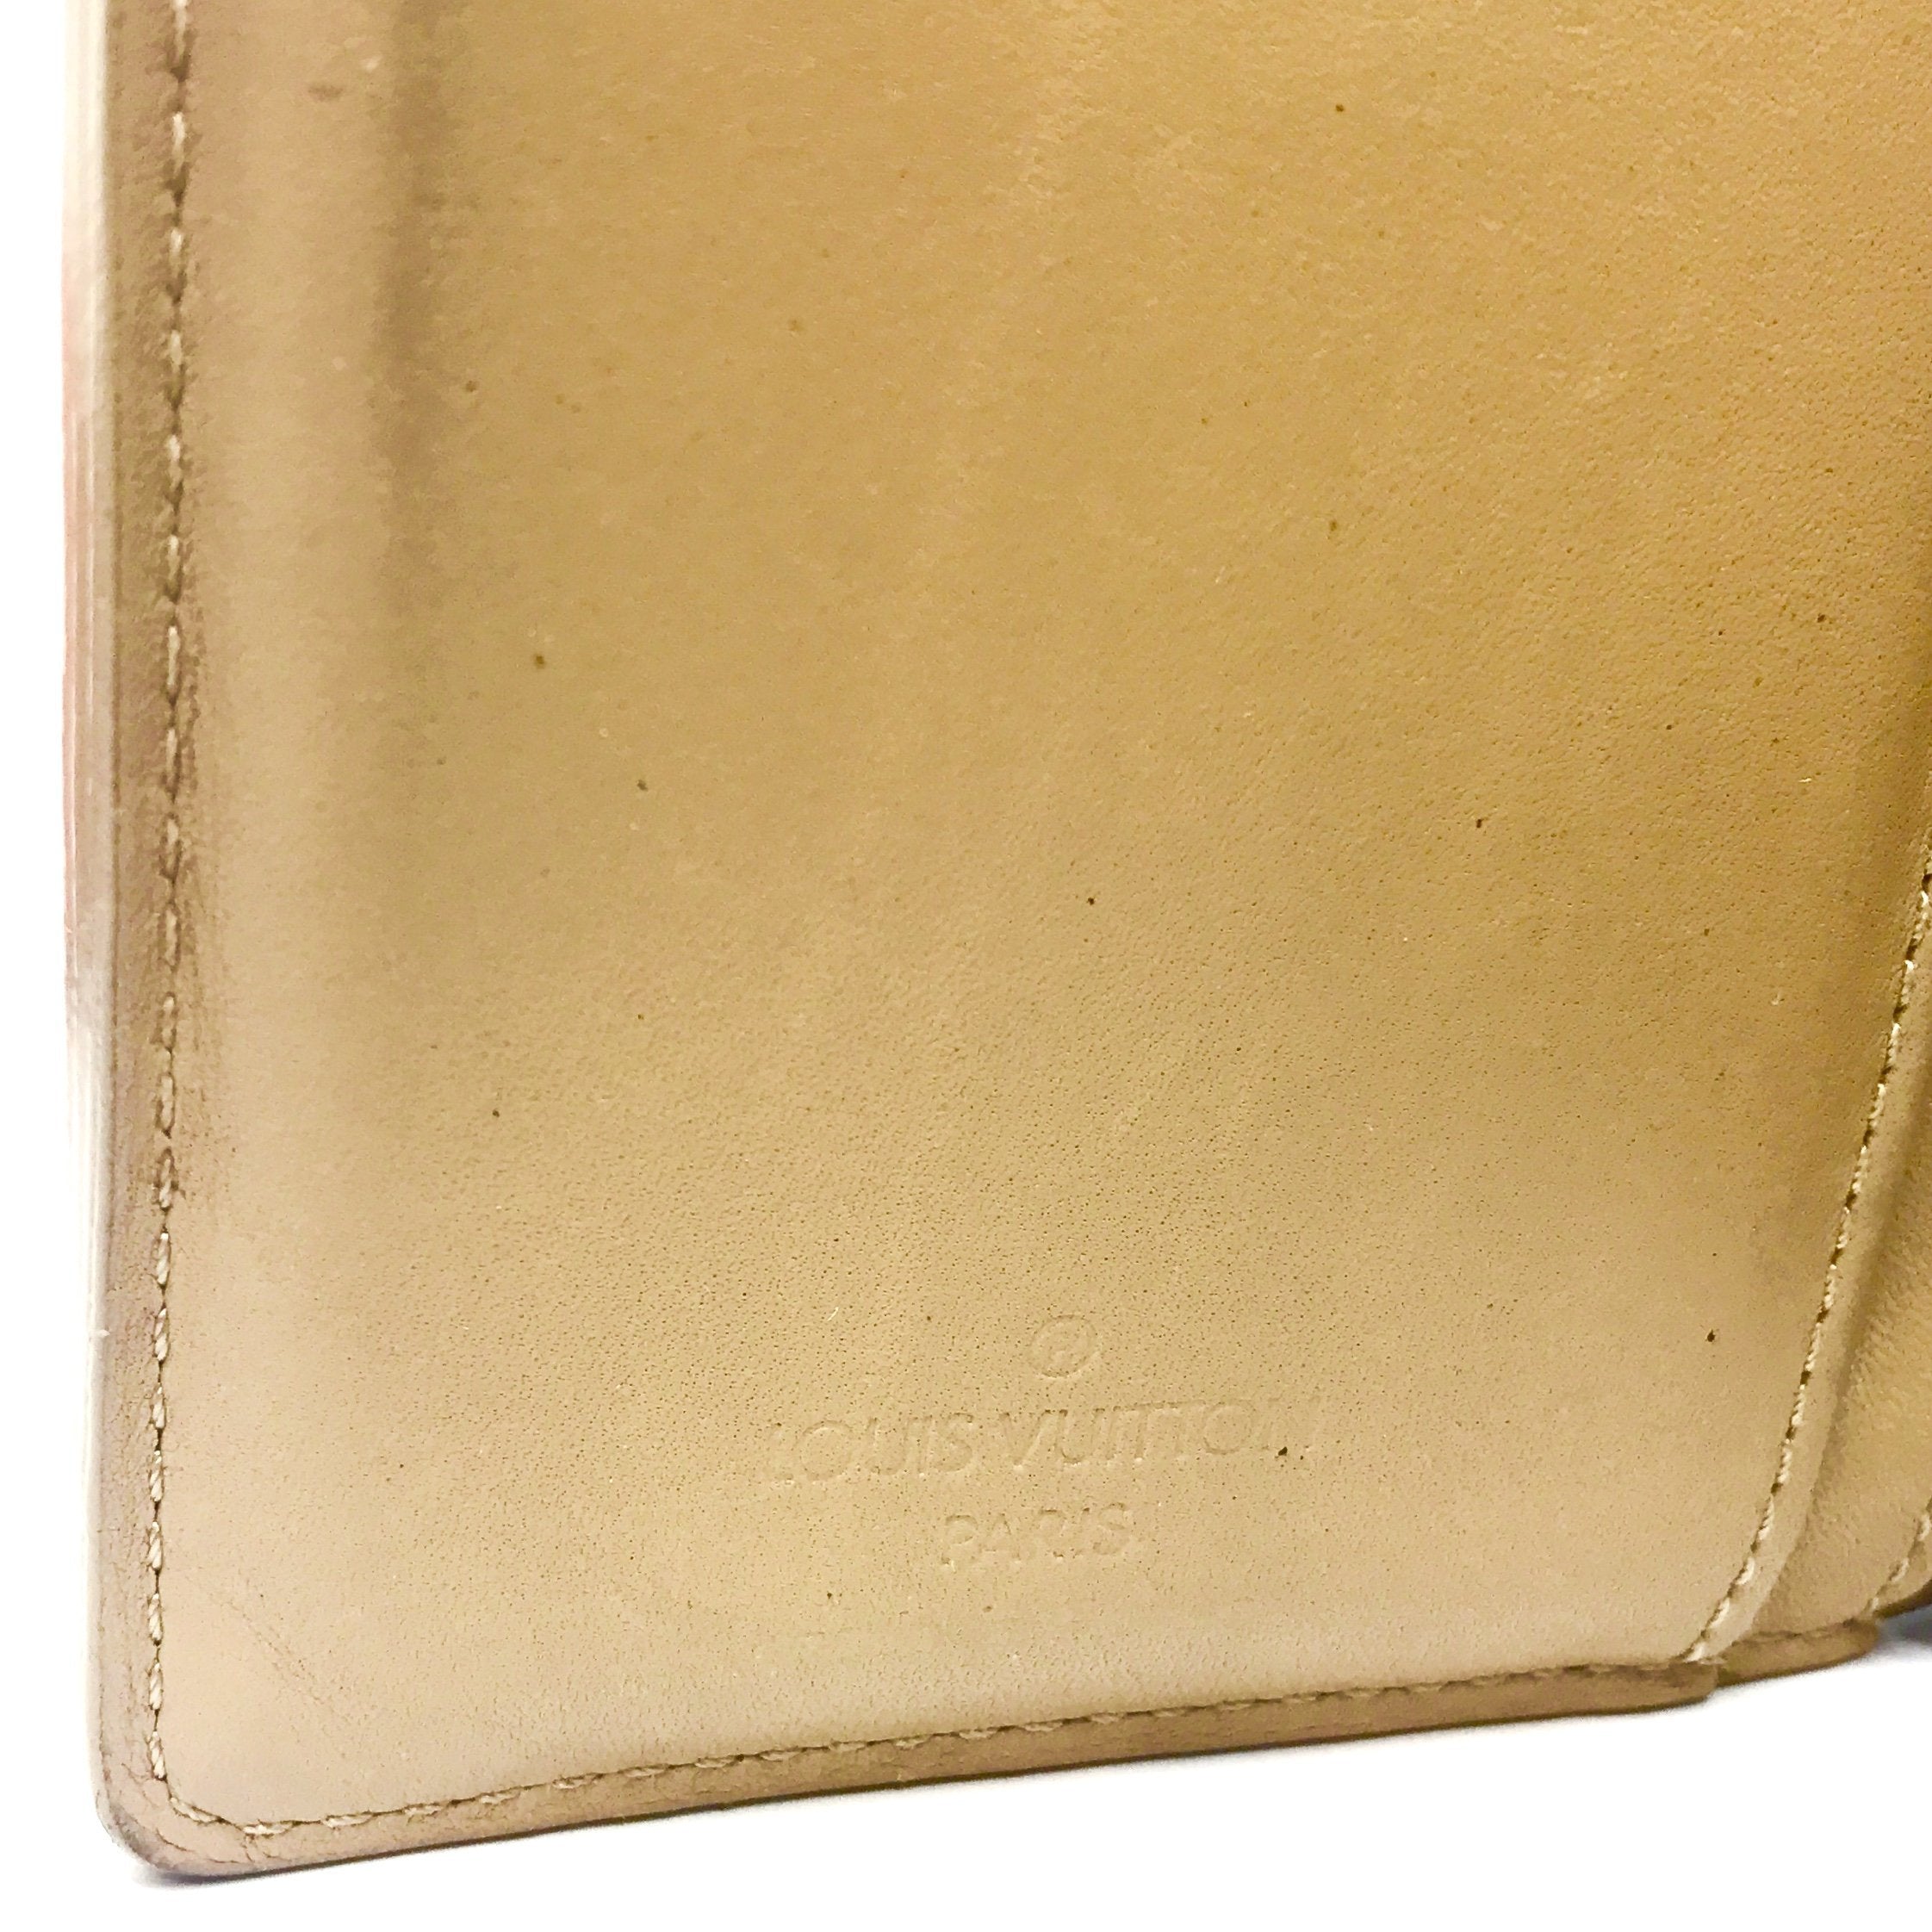 monogram vernis leather wallets